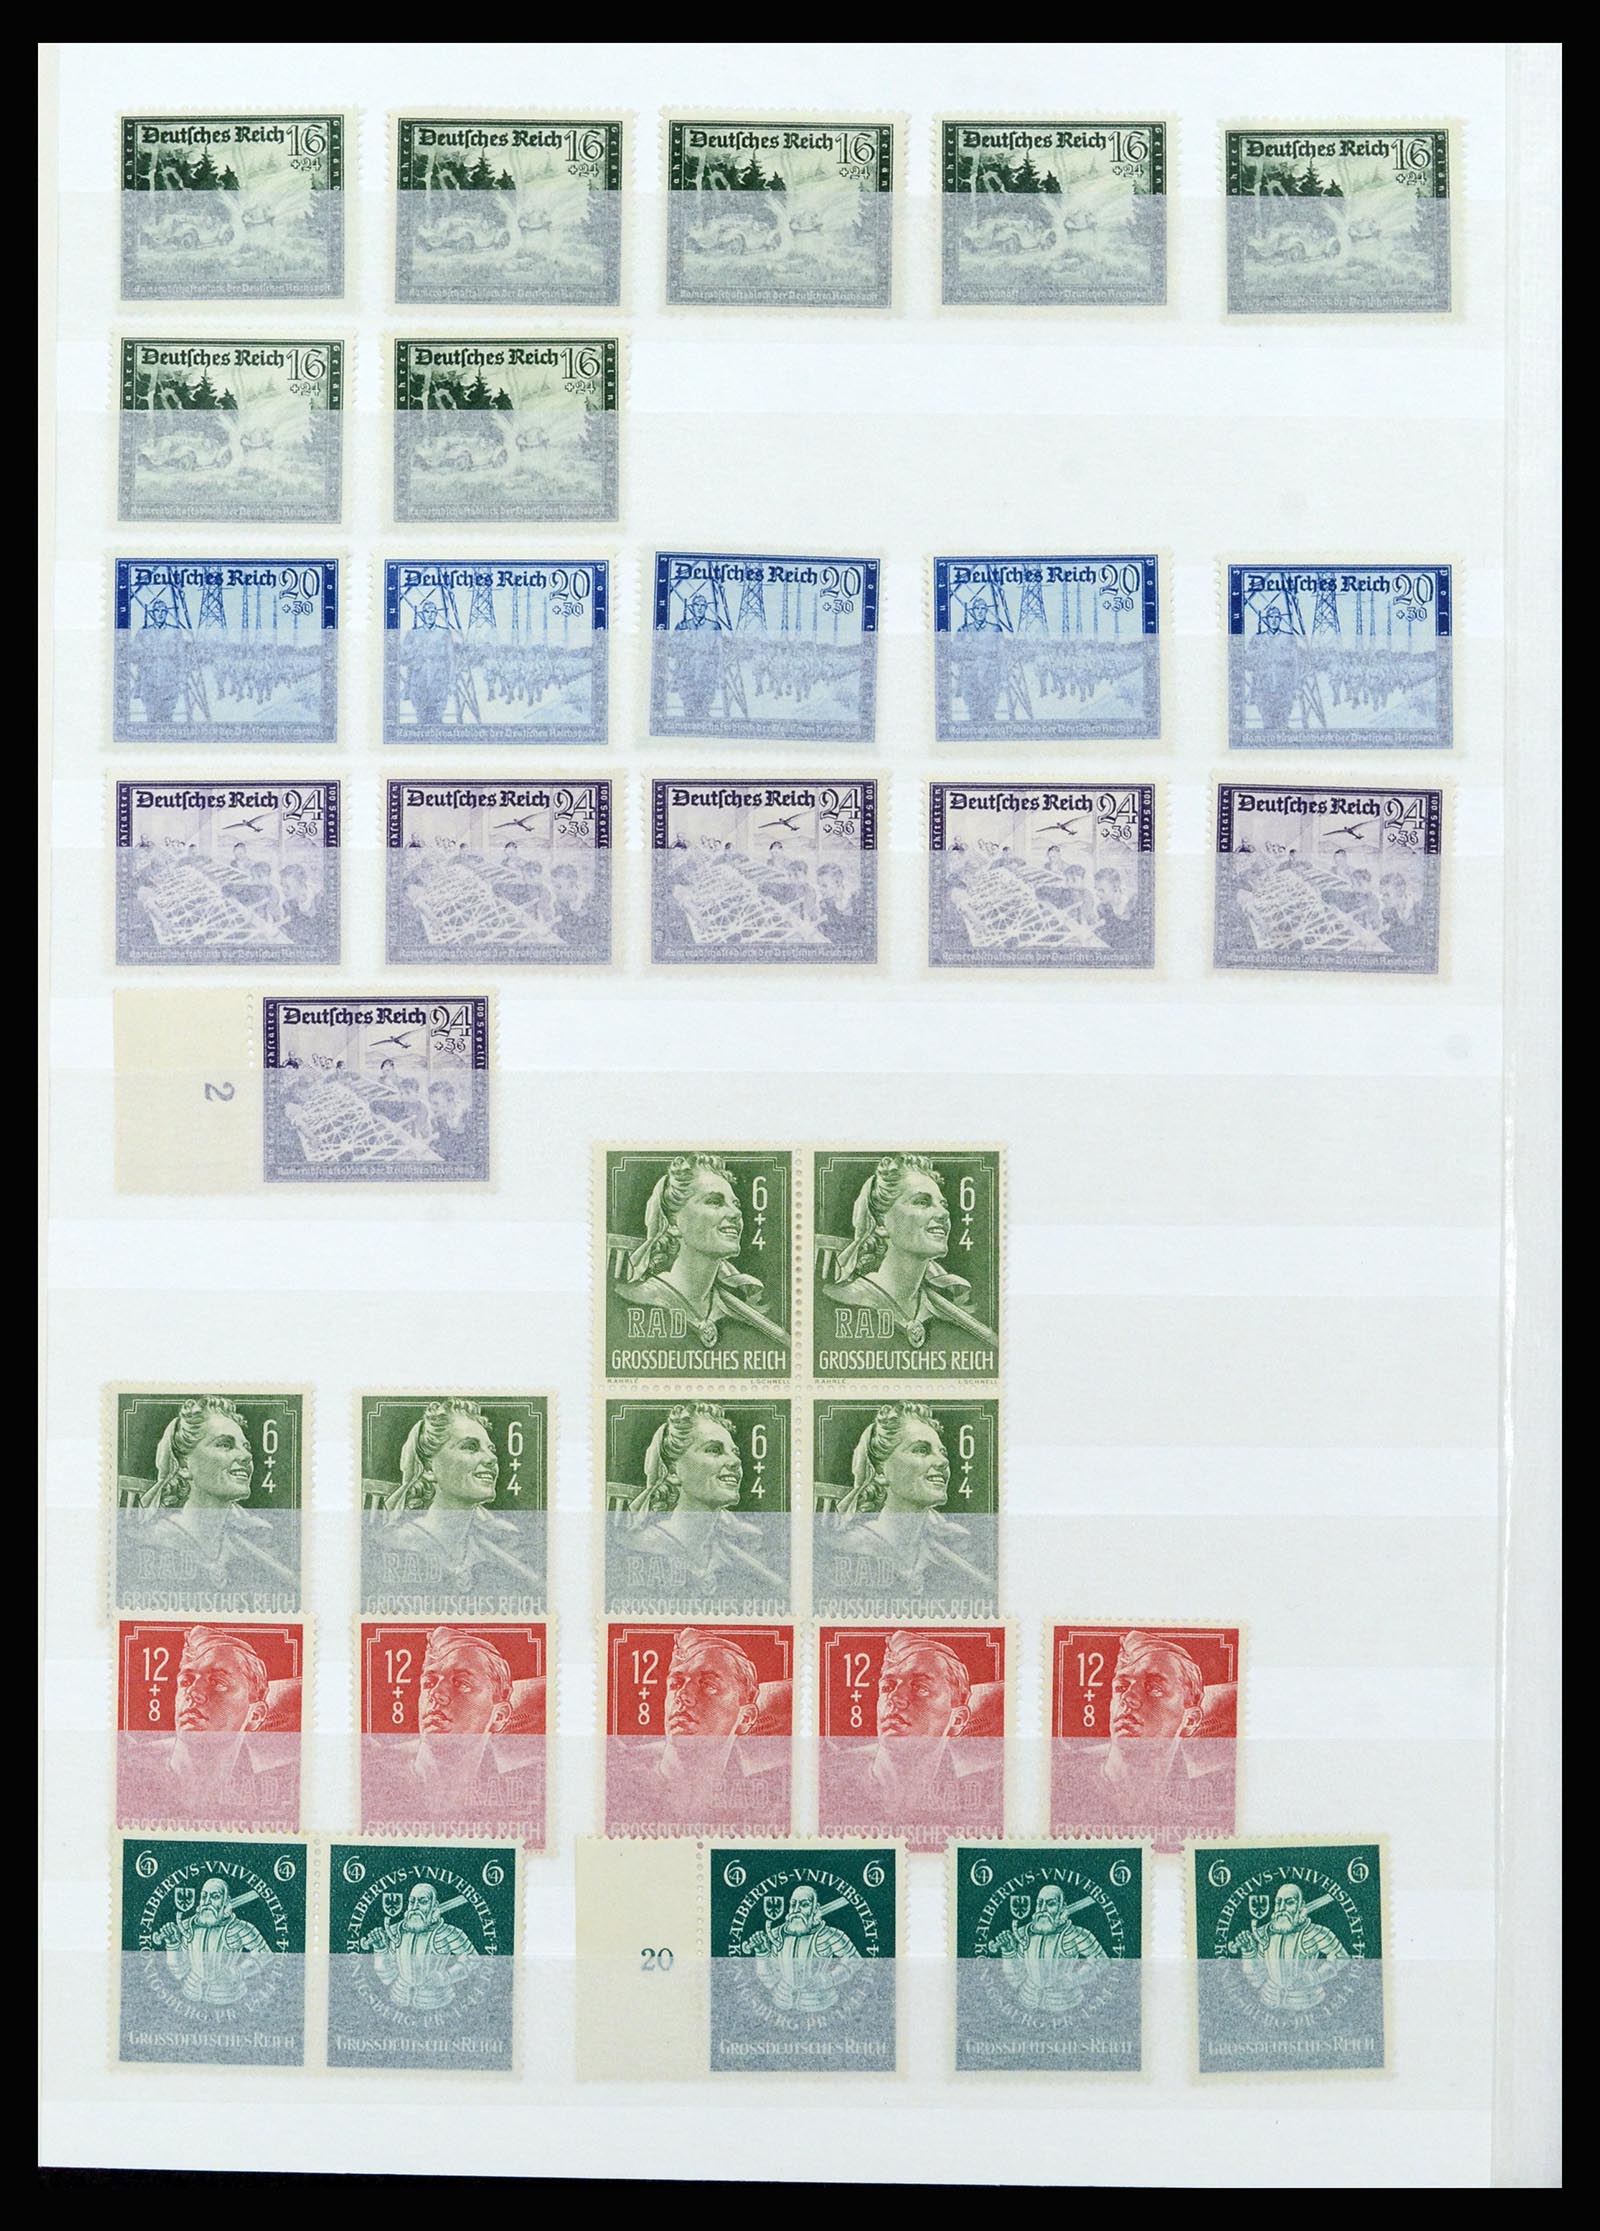 37103 038 - Stamp collection 37103 German Reich 1880-1945.